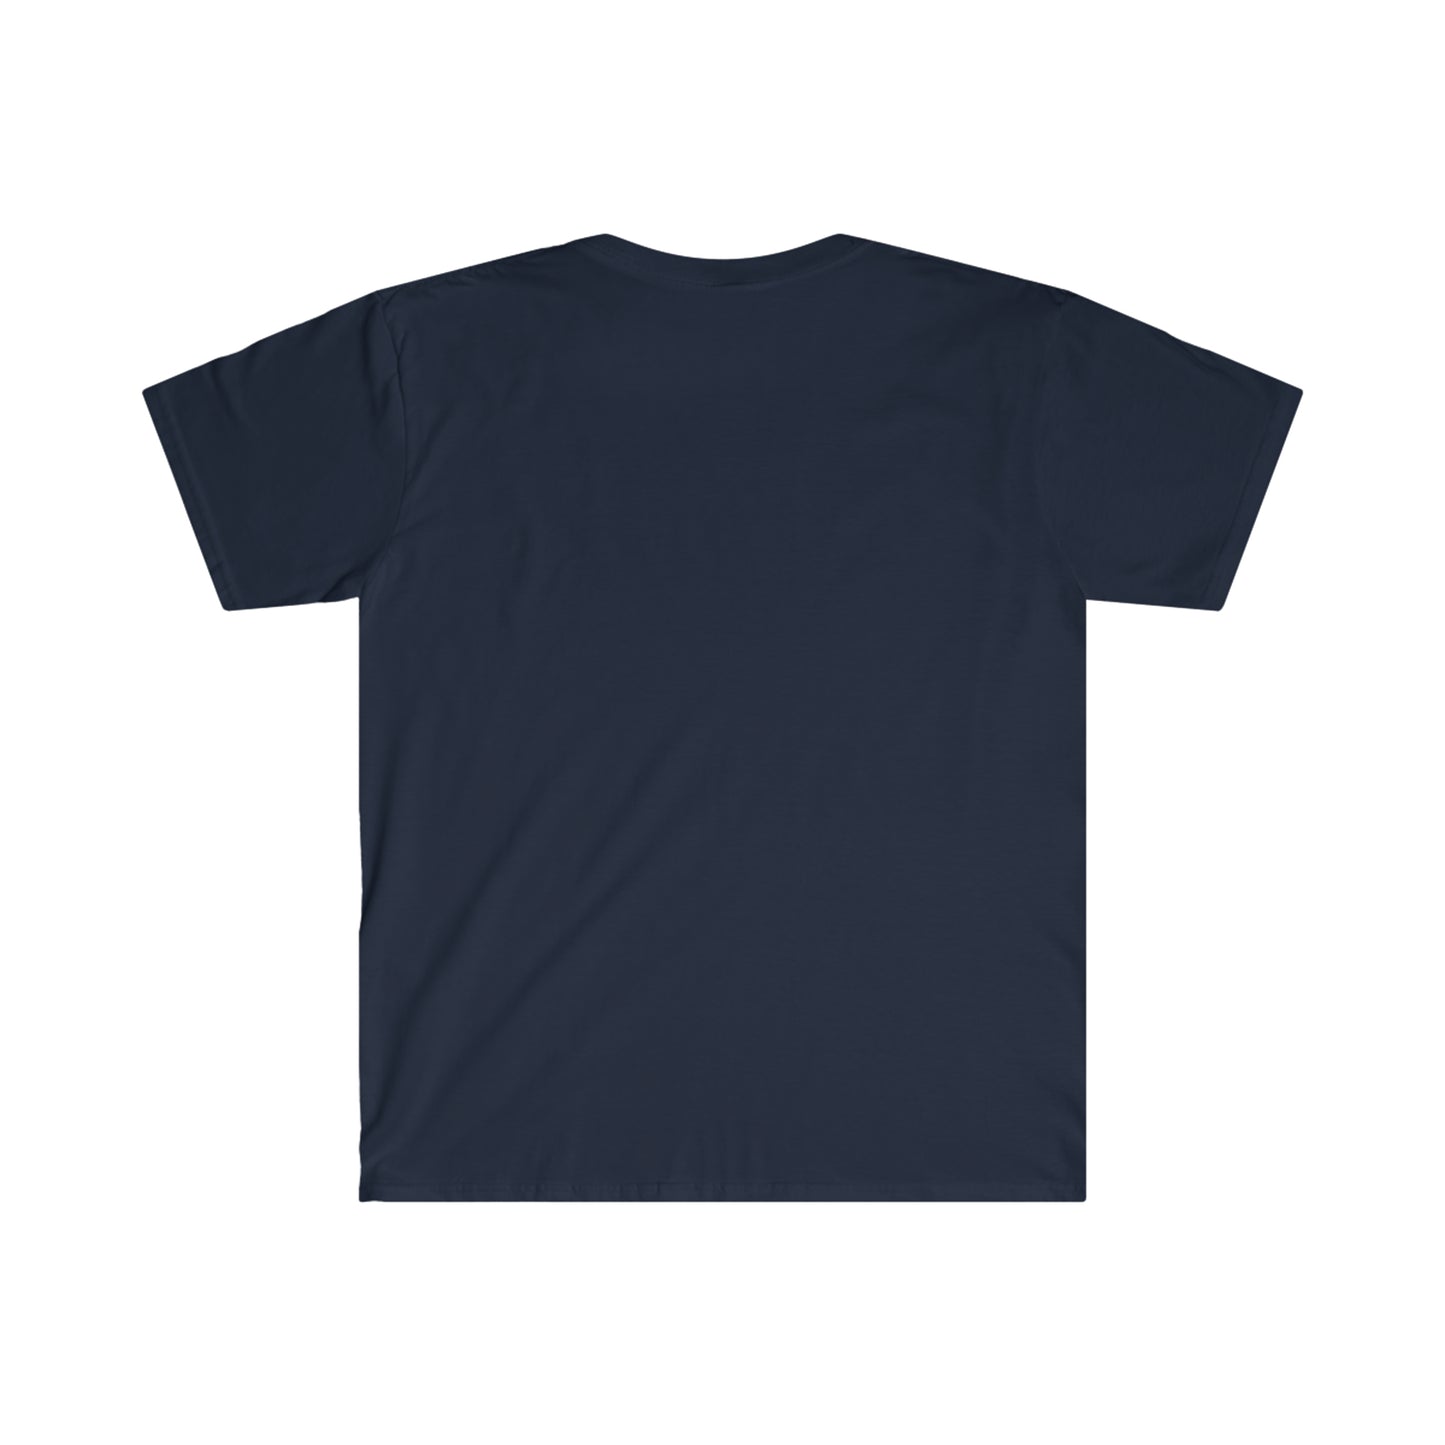 I am BOB | Unisex Soft T-shirt